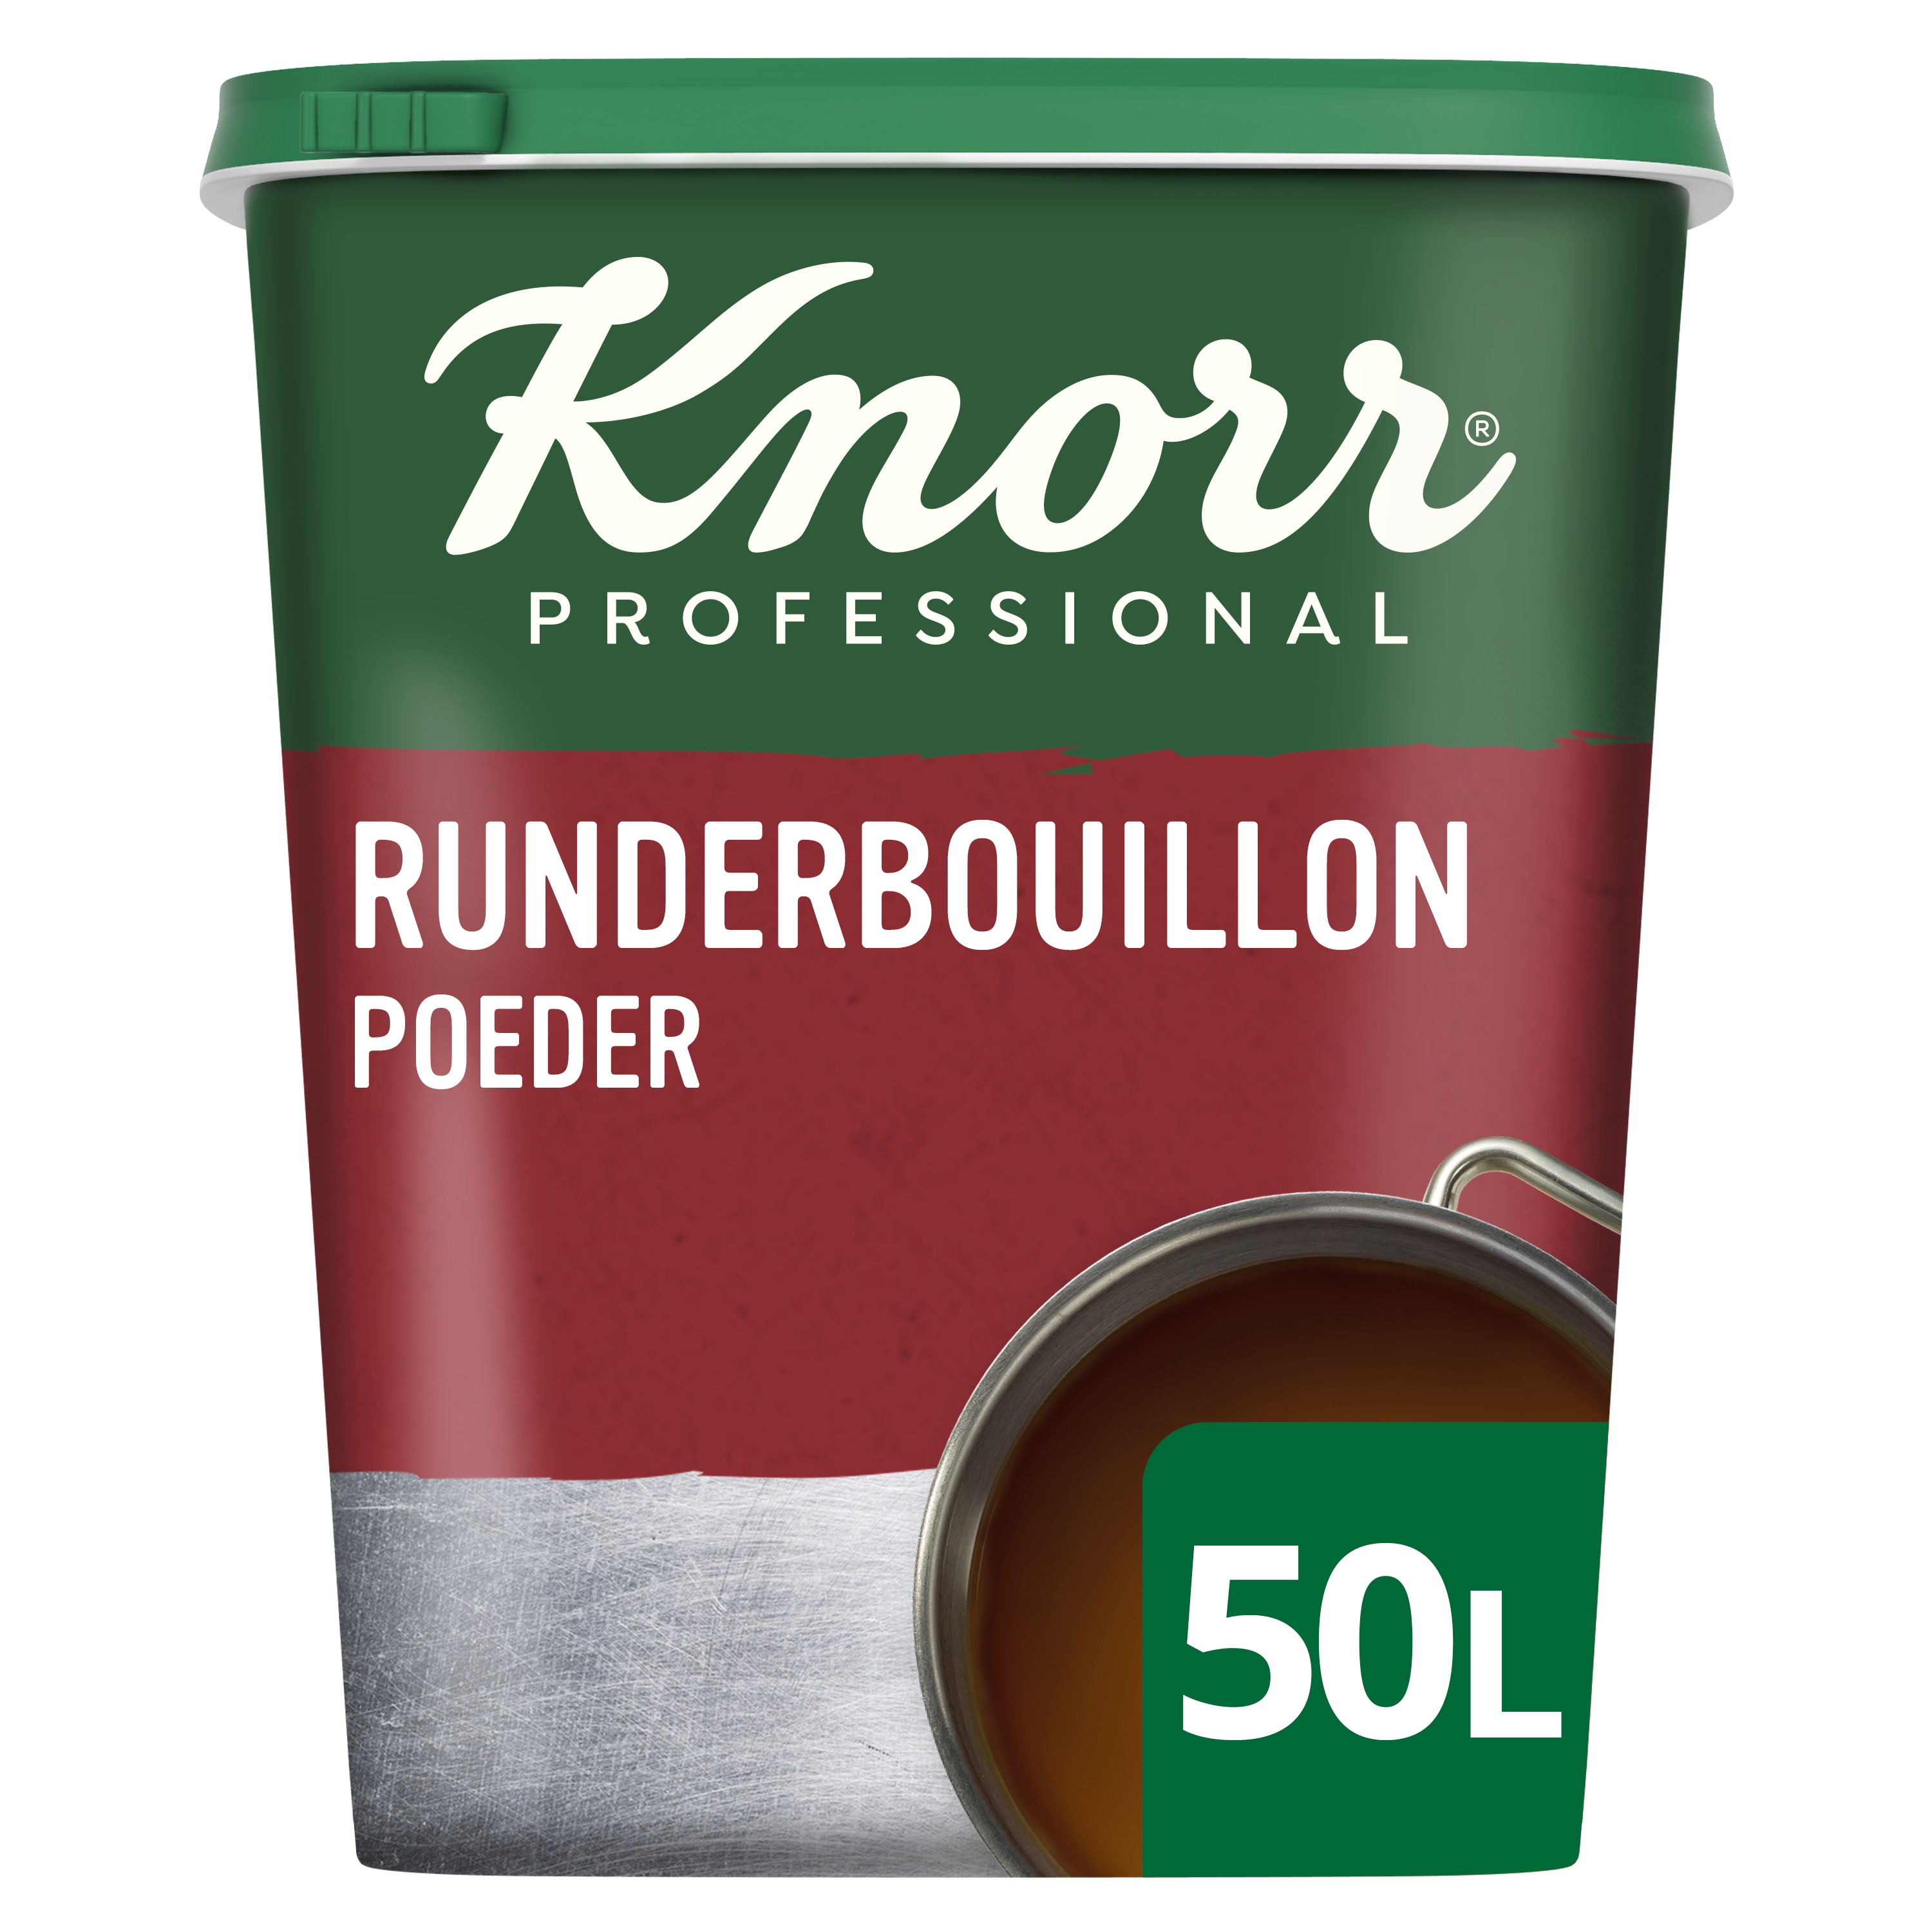 Knorr Runderbouillon Authentiek Poeder opbrengst 50L